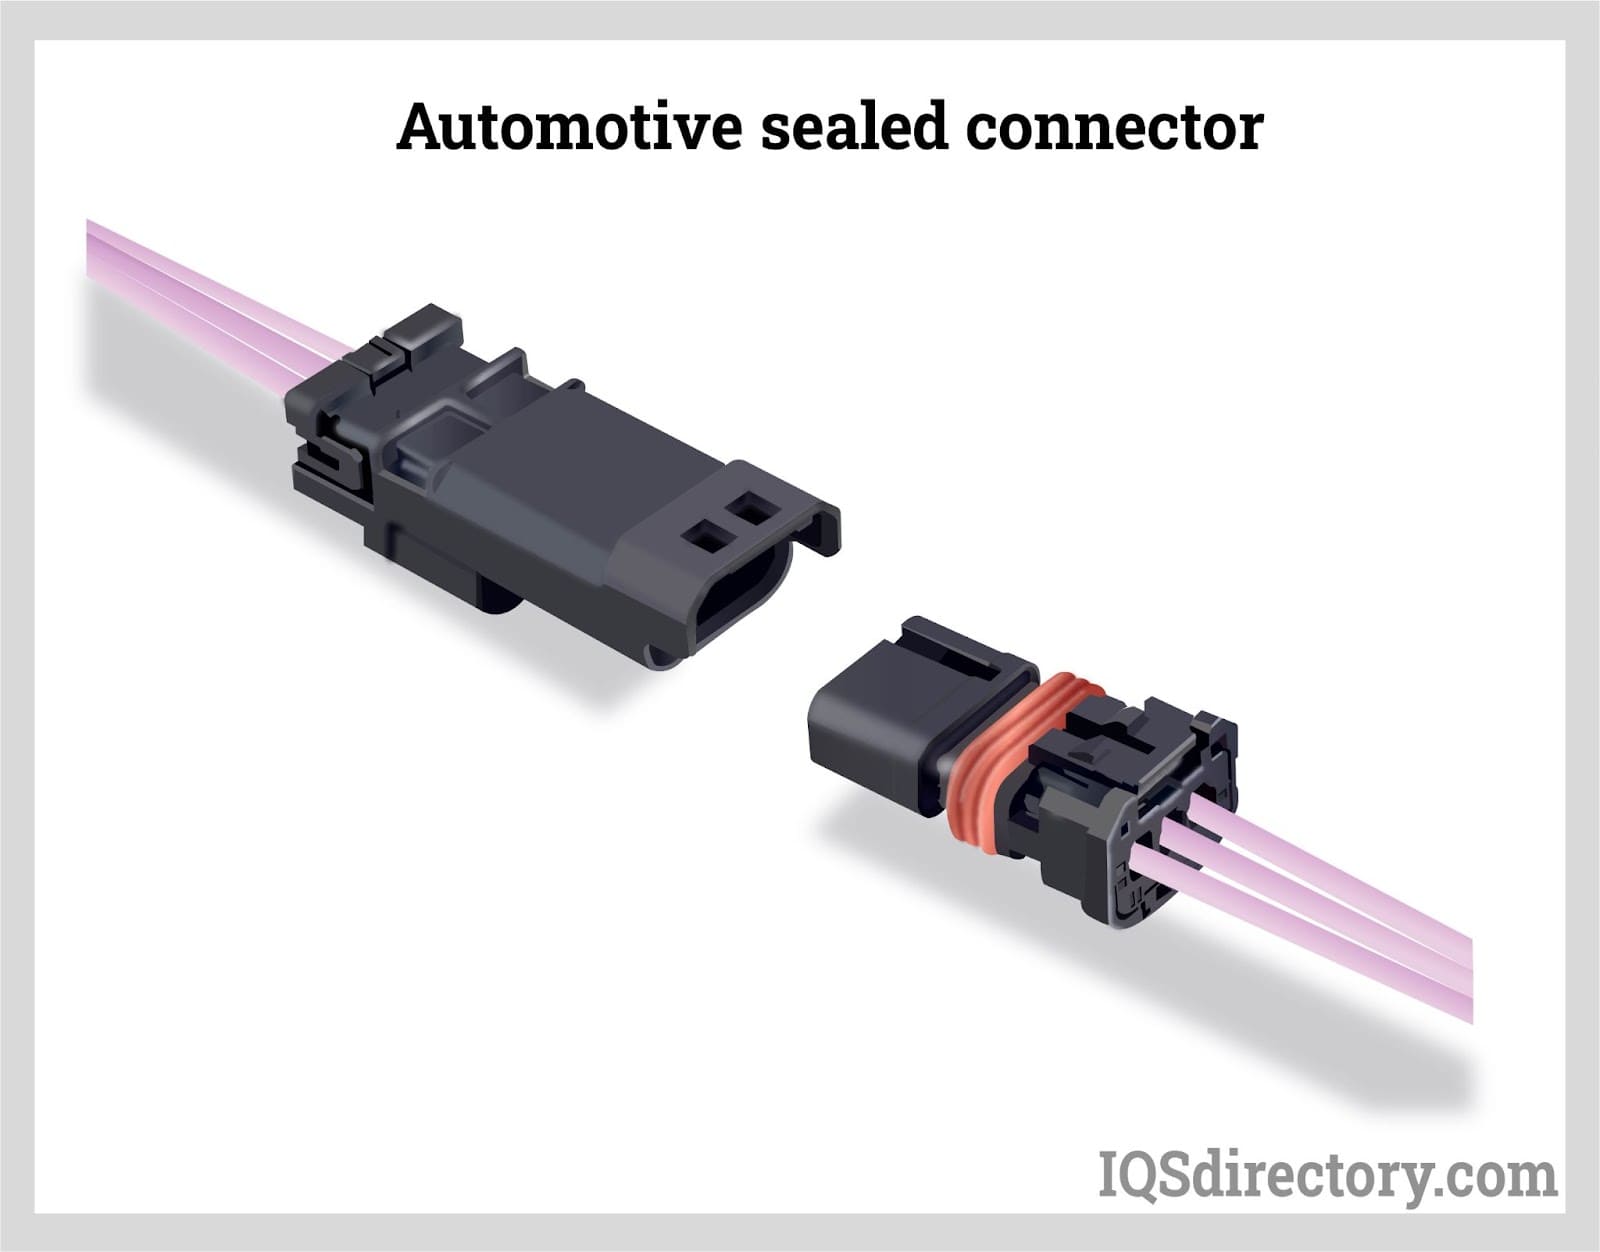 Automotive sealed connector